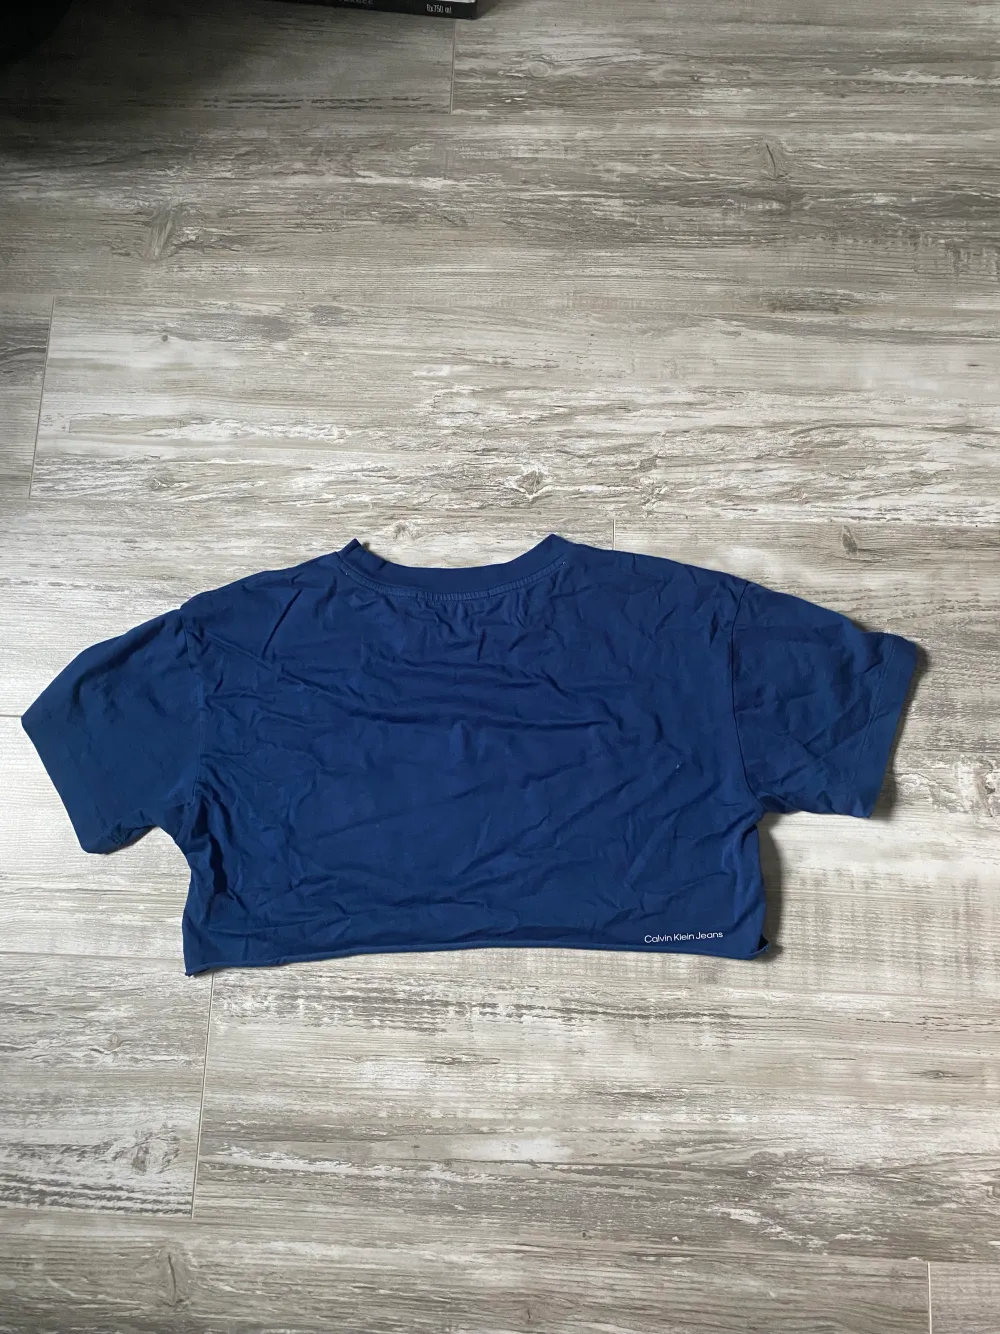 Marinblå croppad Calvin Klein T-Shirt. Storlek S. 100kr plus frakt.. T-shirts.